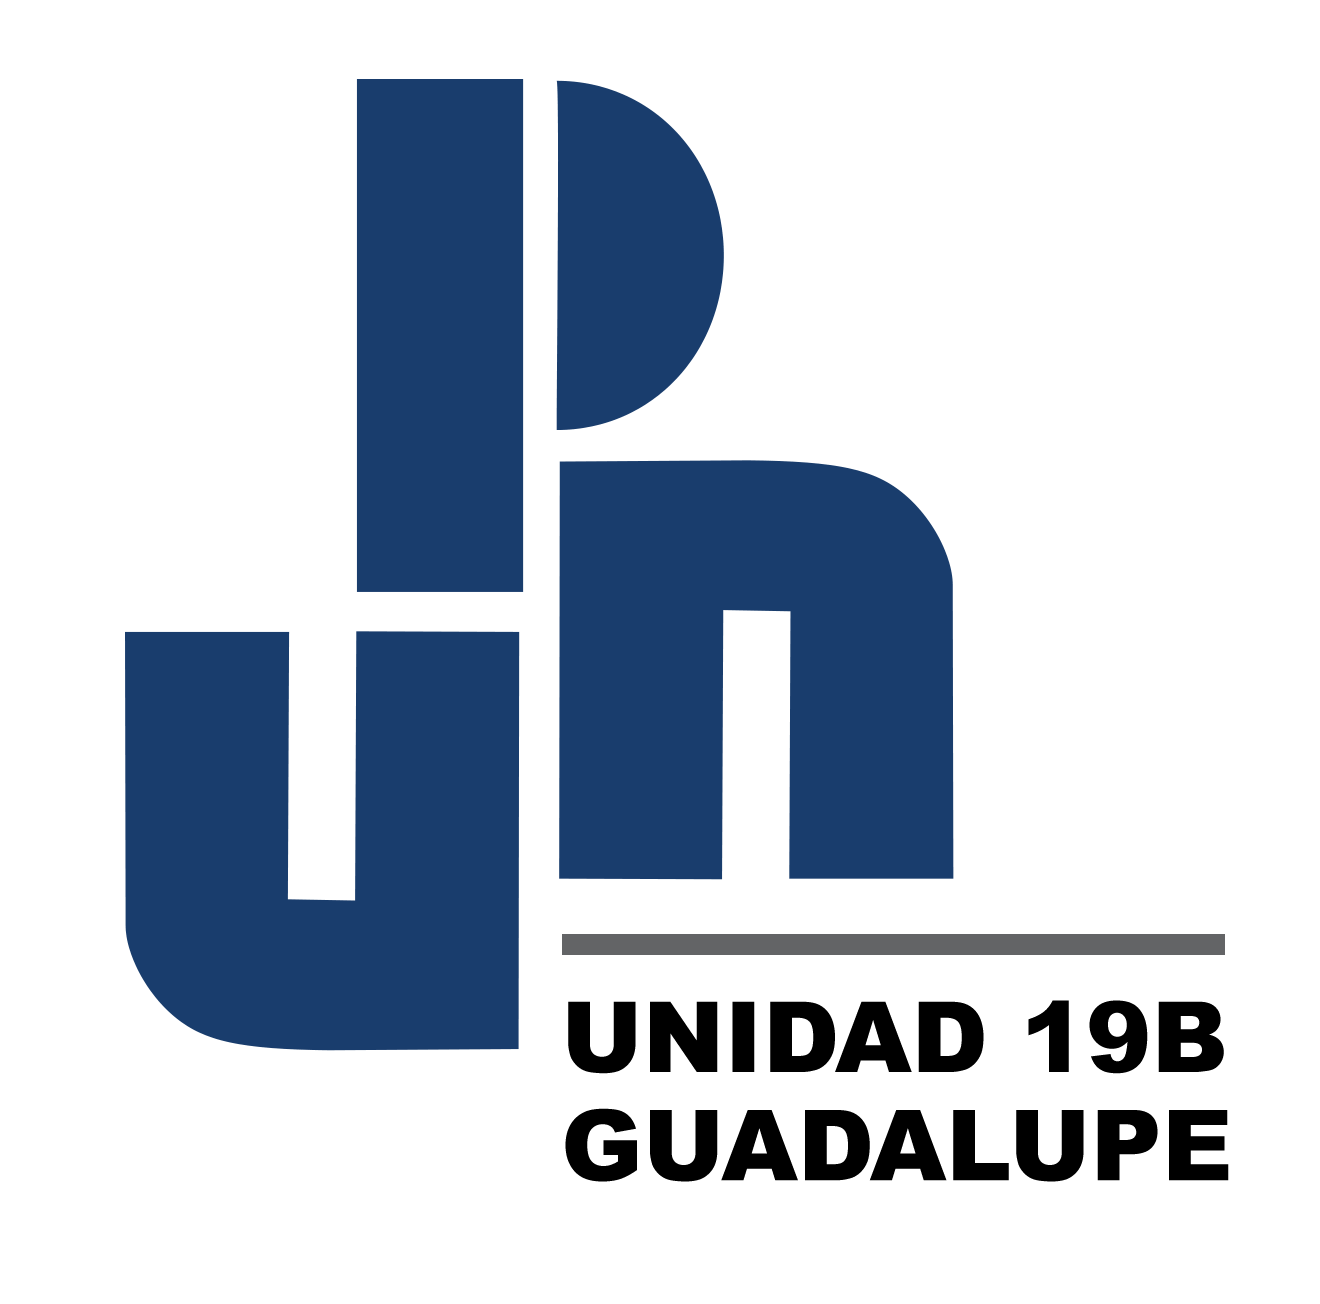 UPN Logo - Upn Logo - Page 2 - 9000+ Logo Design Ideas